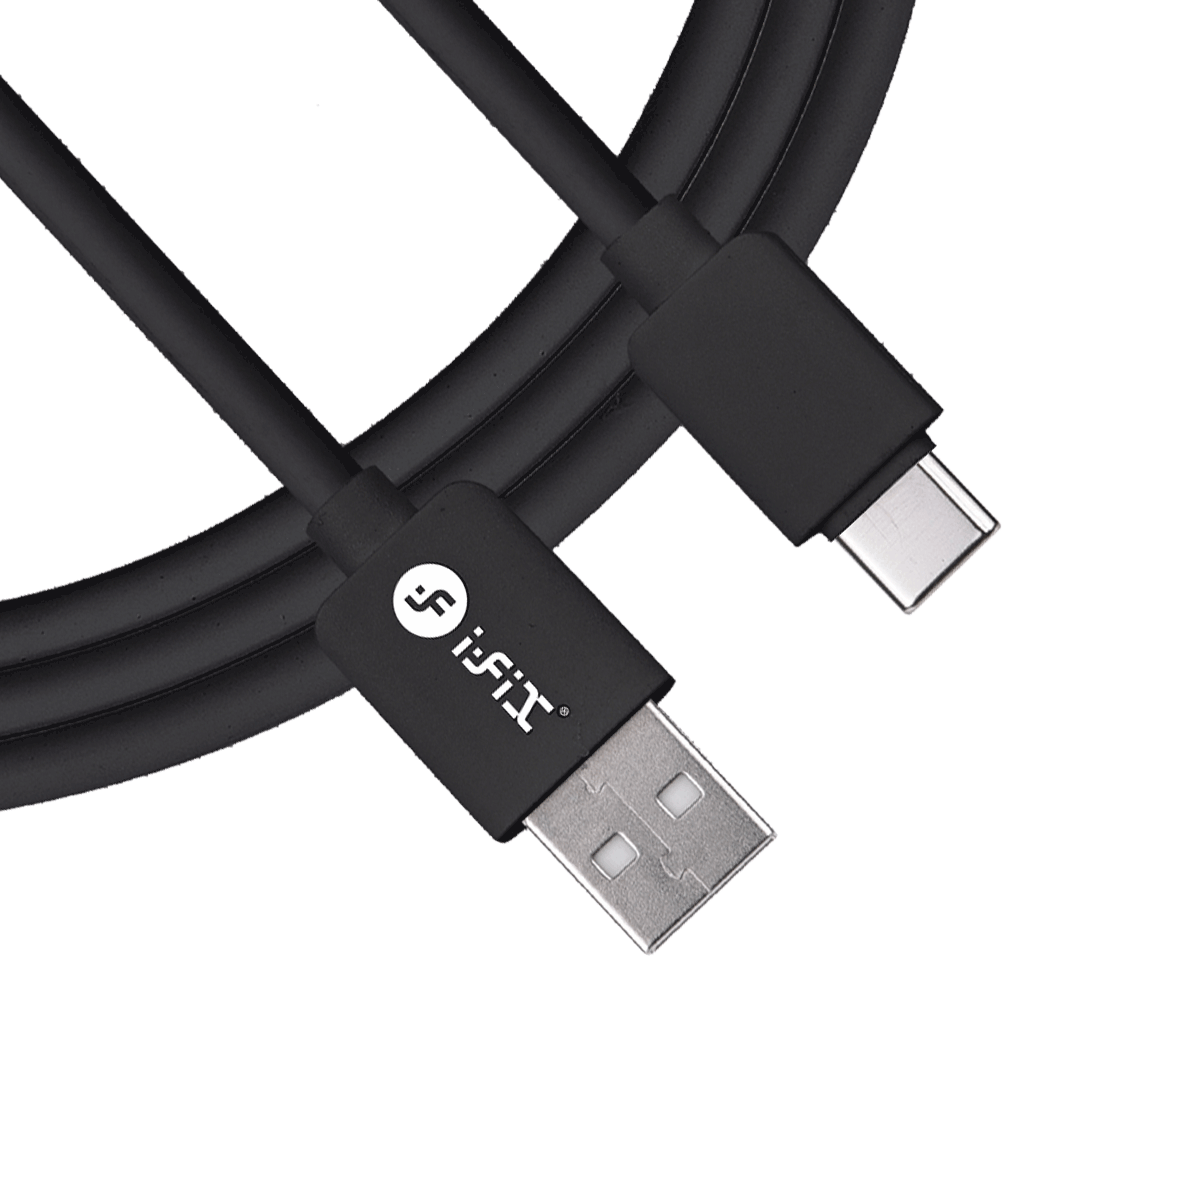 IF-QC 3.0 Qualcomm Type-C USB Data Cable (Black)